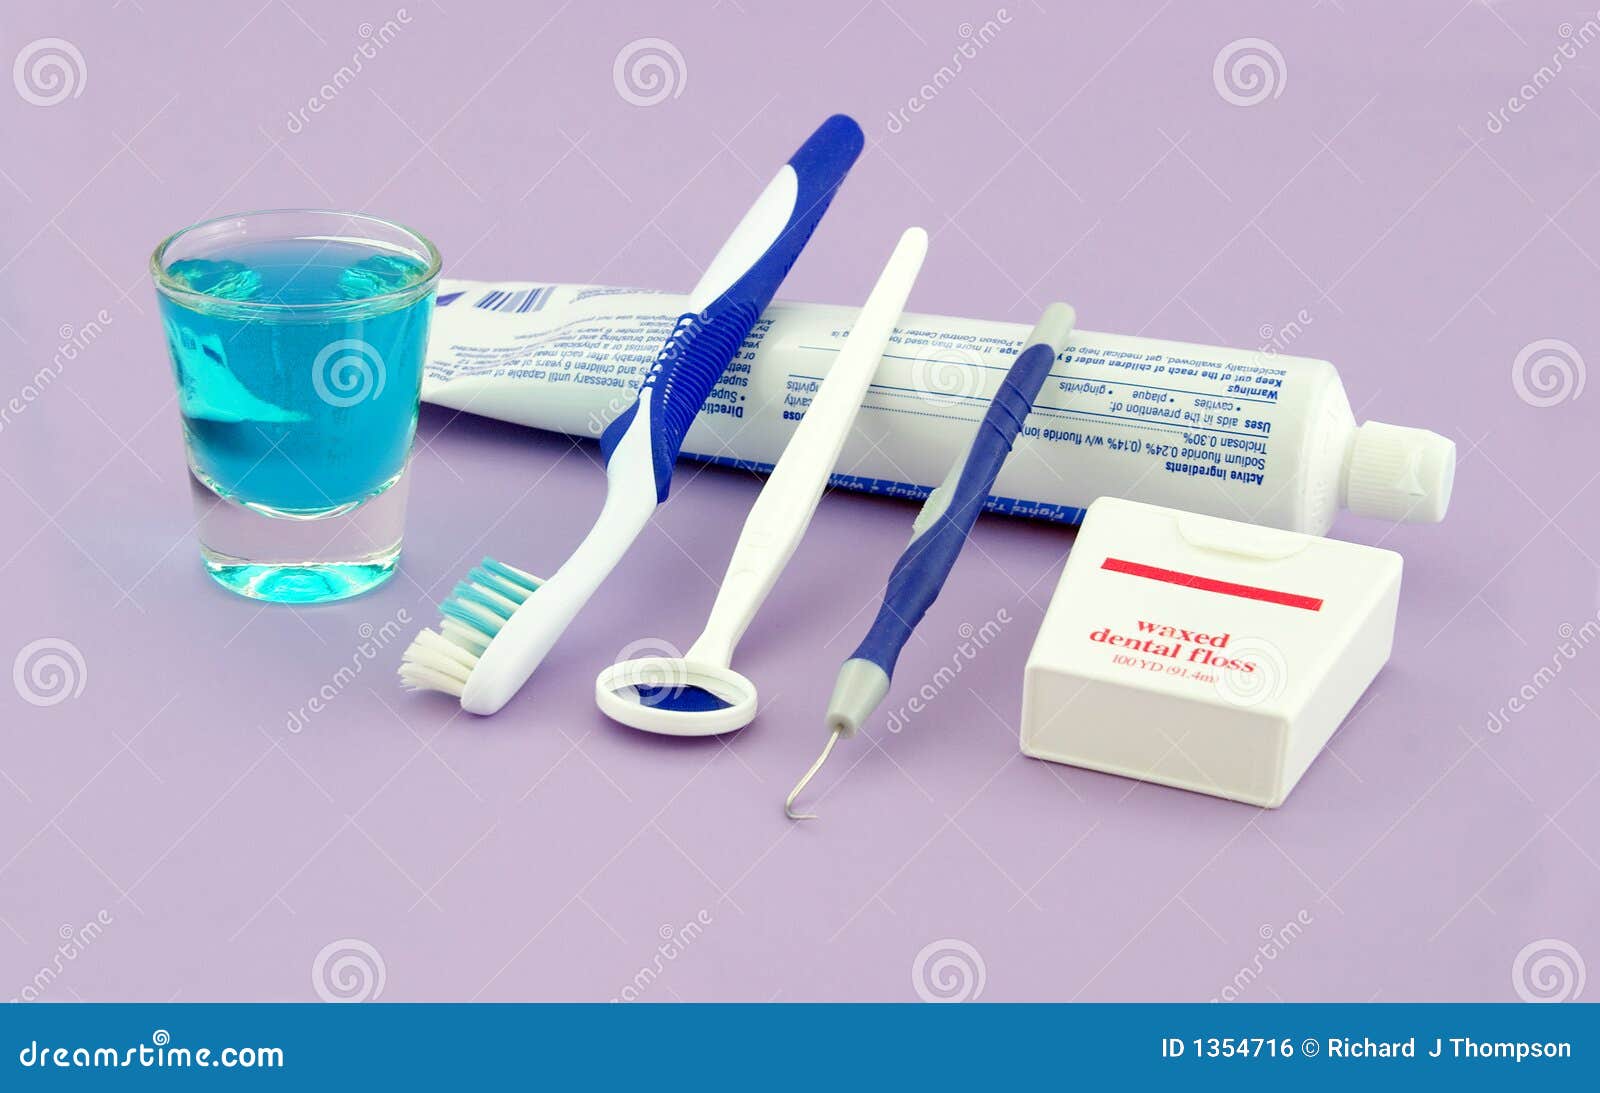 dental health tools